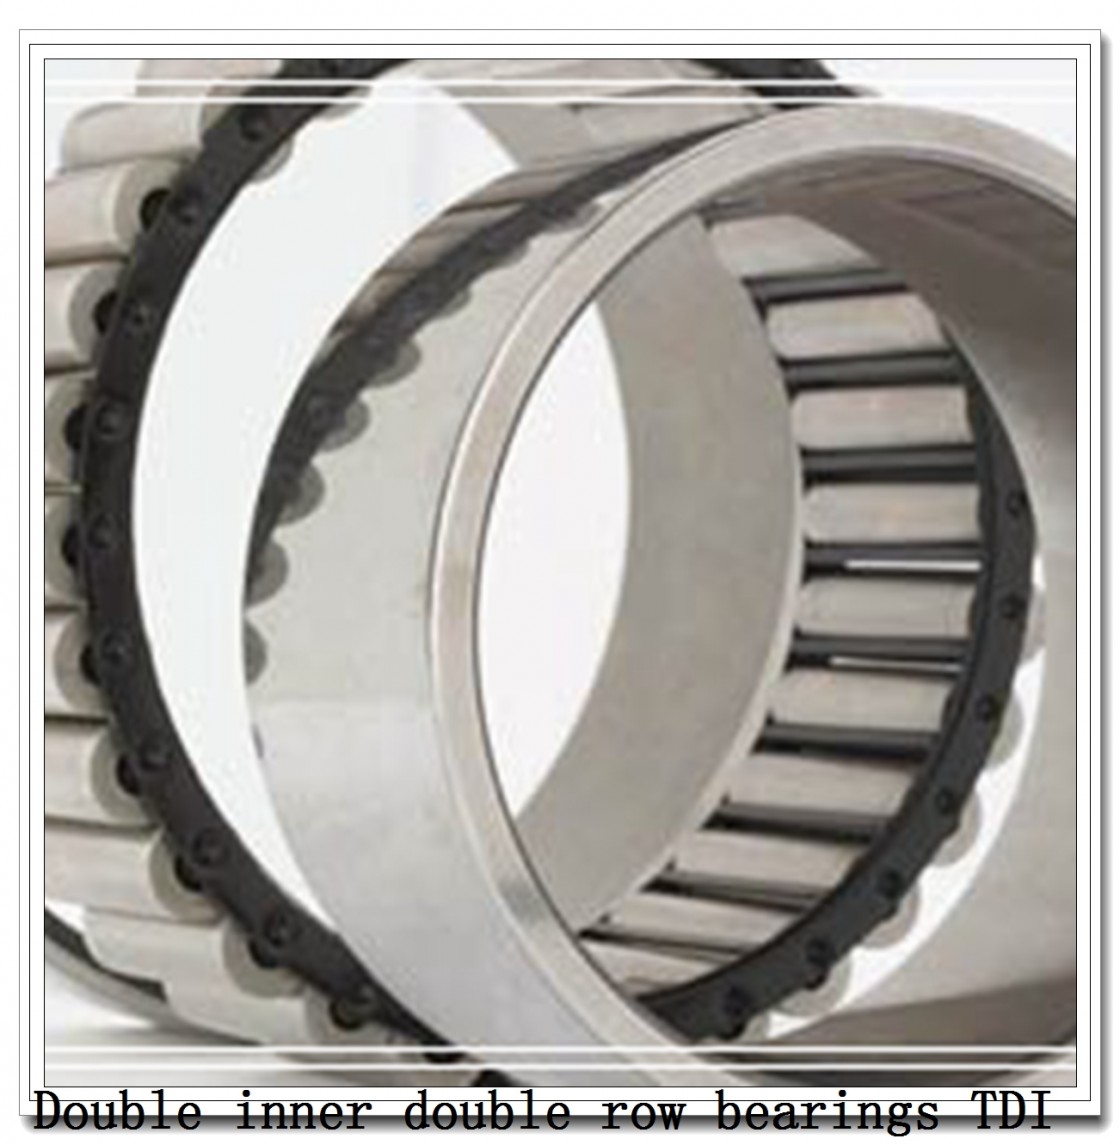 670TDO980-2 Double inner double row bearings TDI